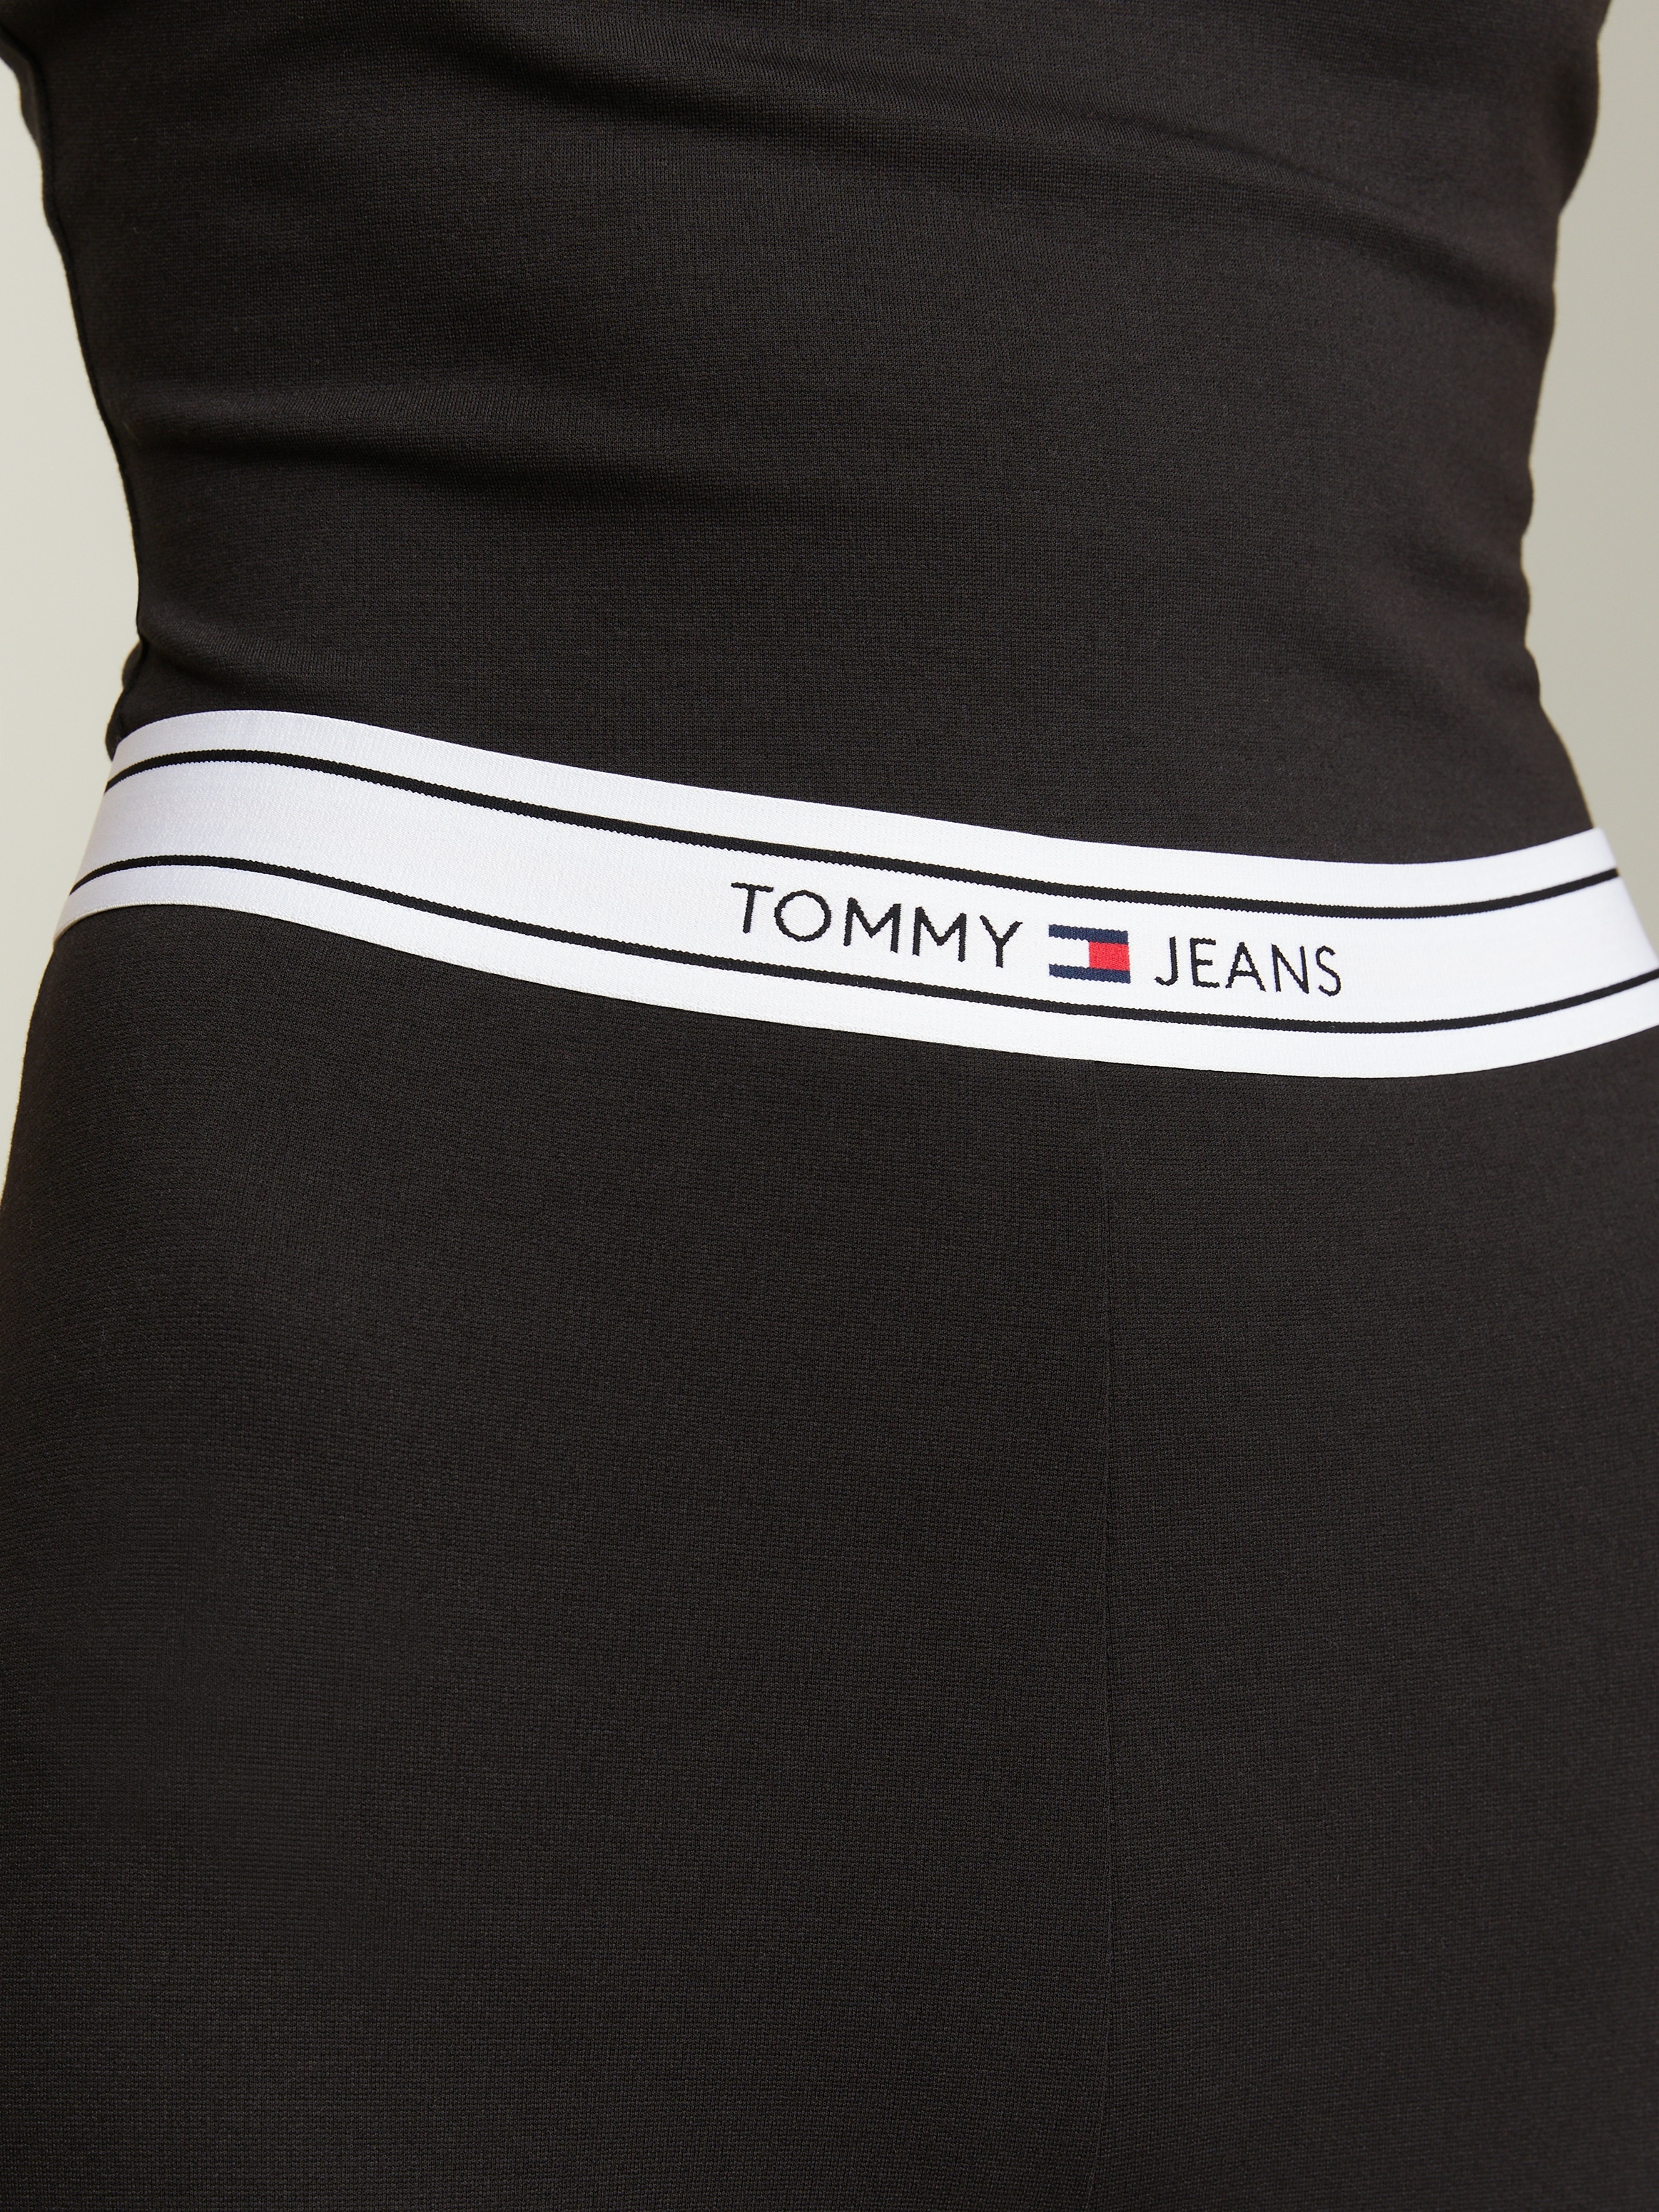 Tommy Jeans Leggings »TJW LOGO TAPING LEGGING«, mit Tommy Jeans Logomarkenlabel